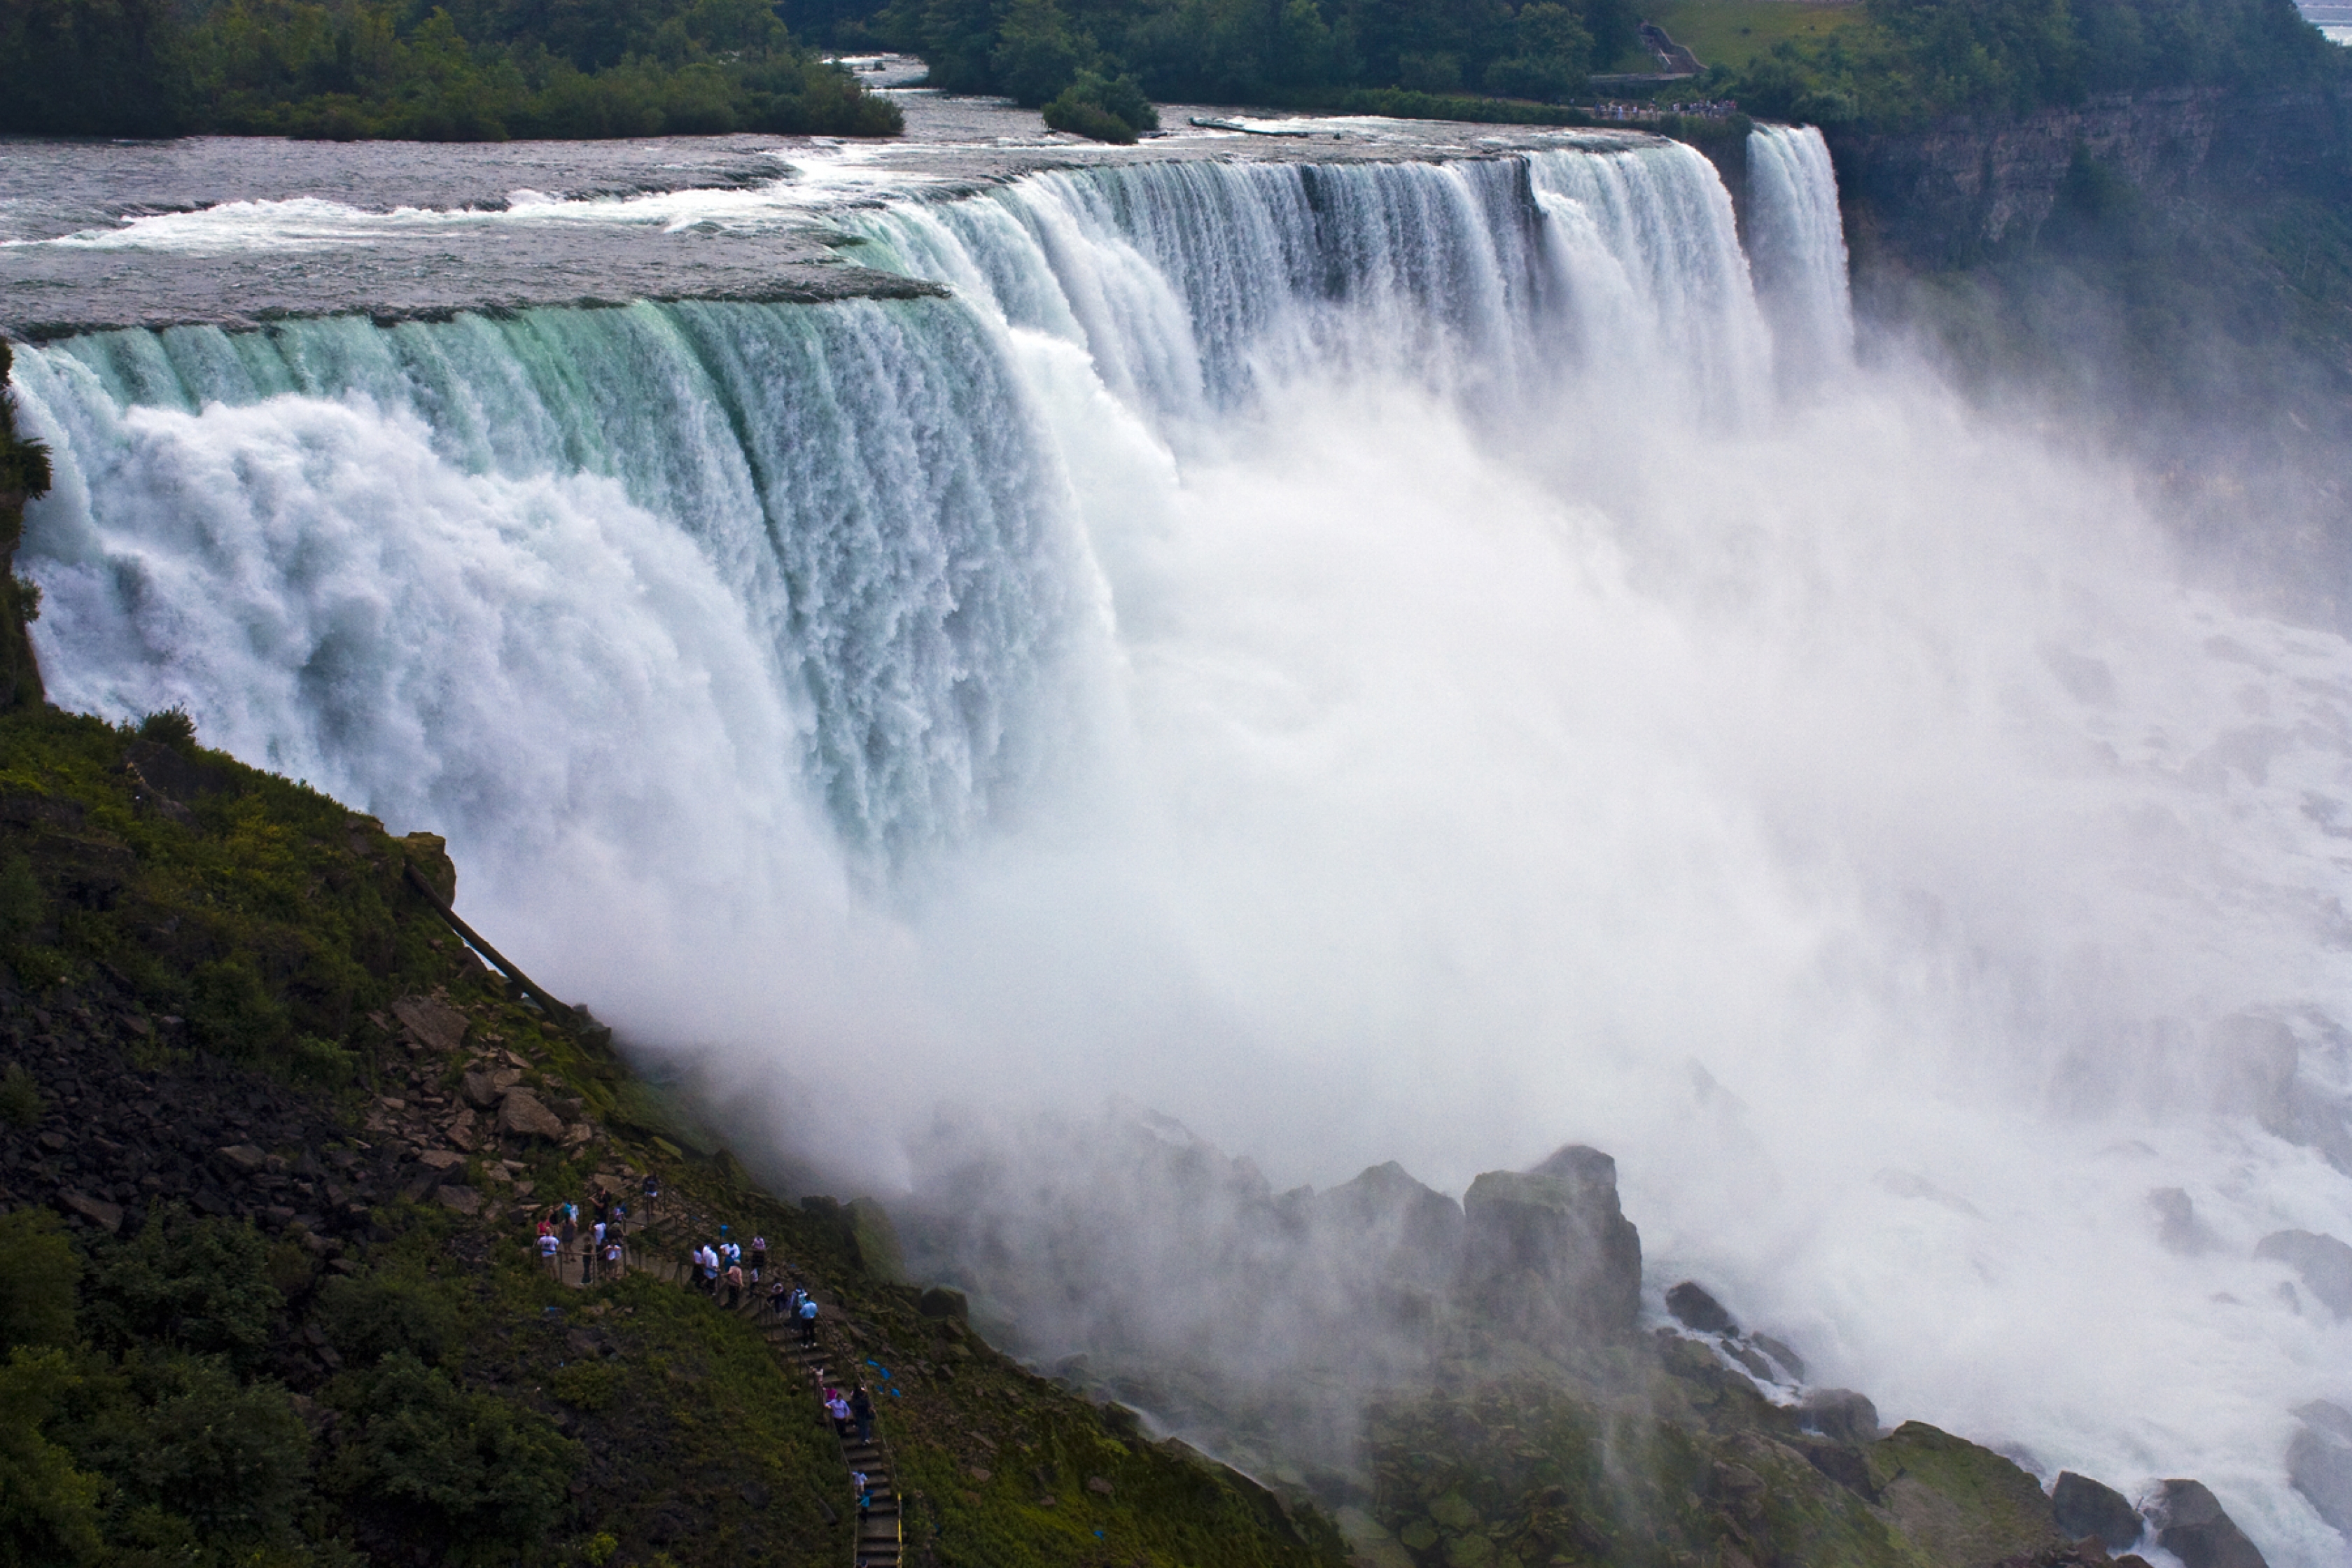 The giant falls of Niagara Falls National Heritage Area